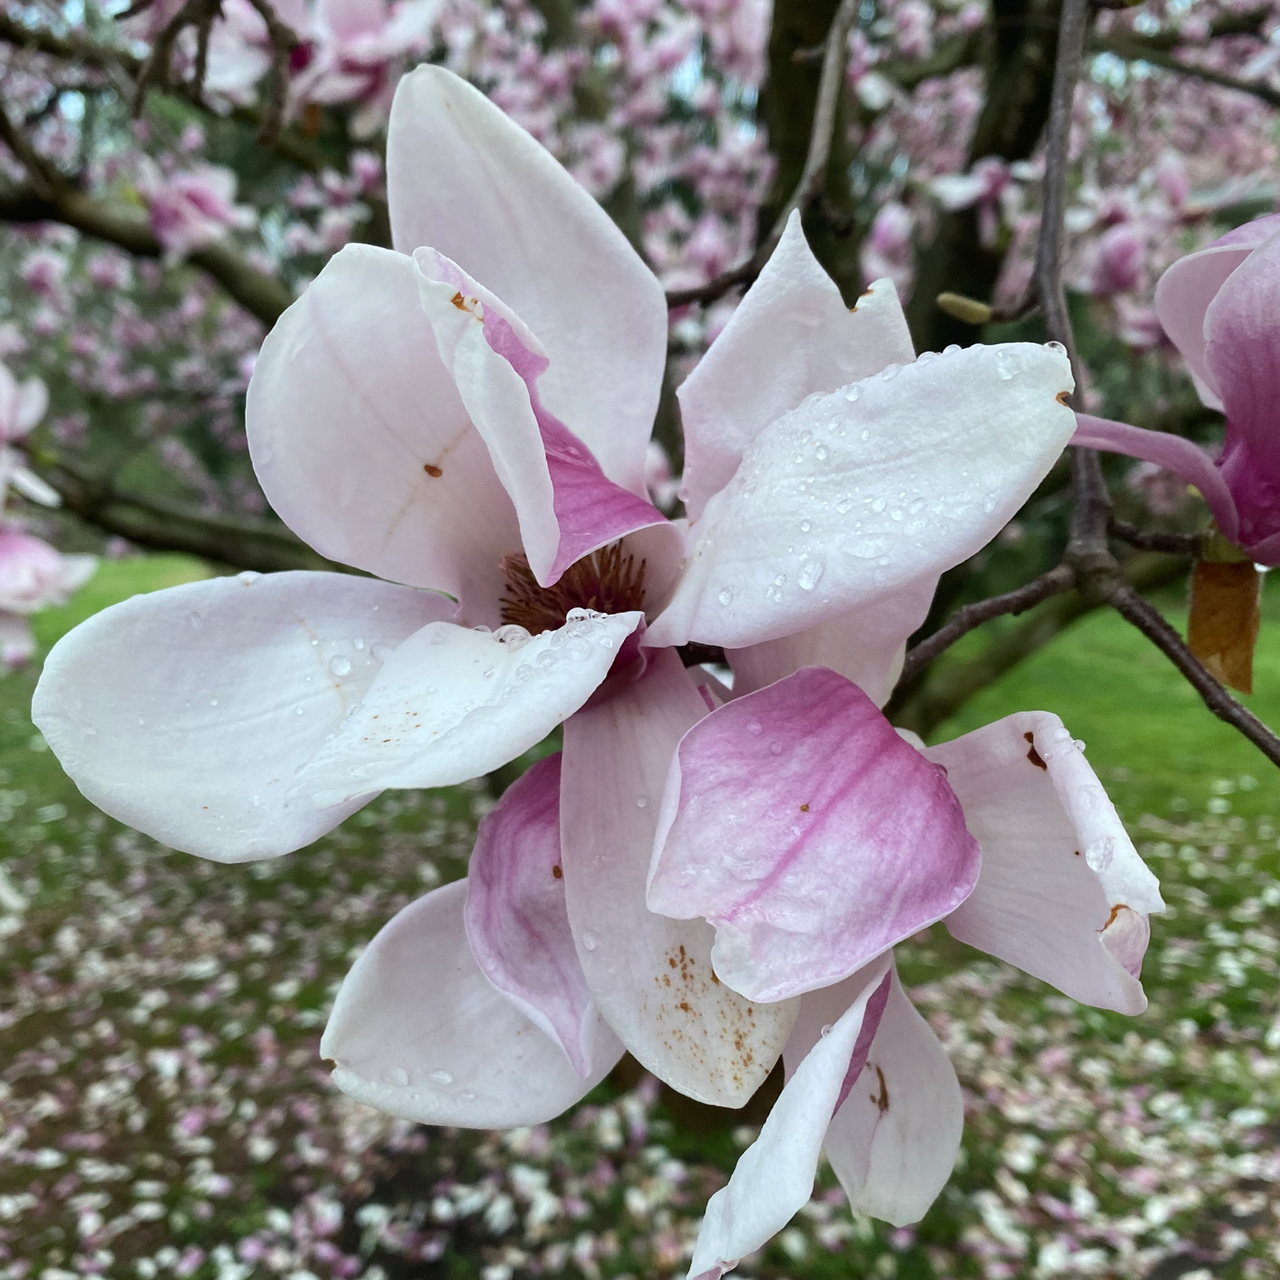 Fully Opened Flower: Saucer Magnolia – Magnolia x soulangeana in Great Falls, VA